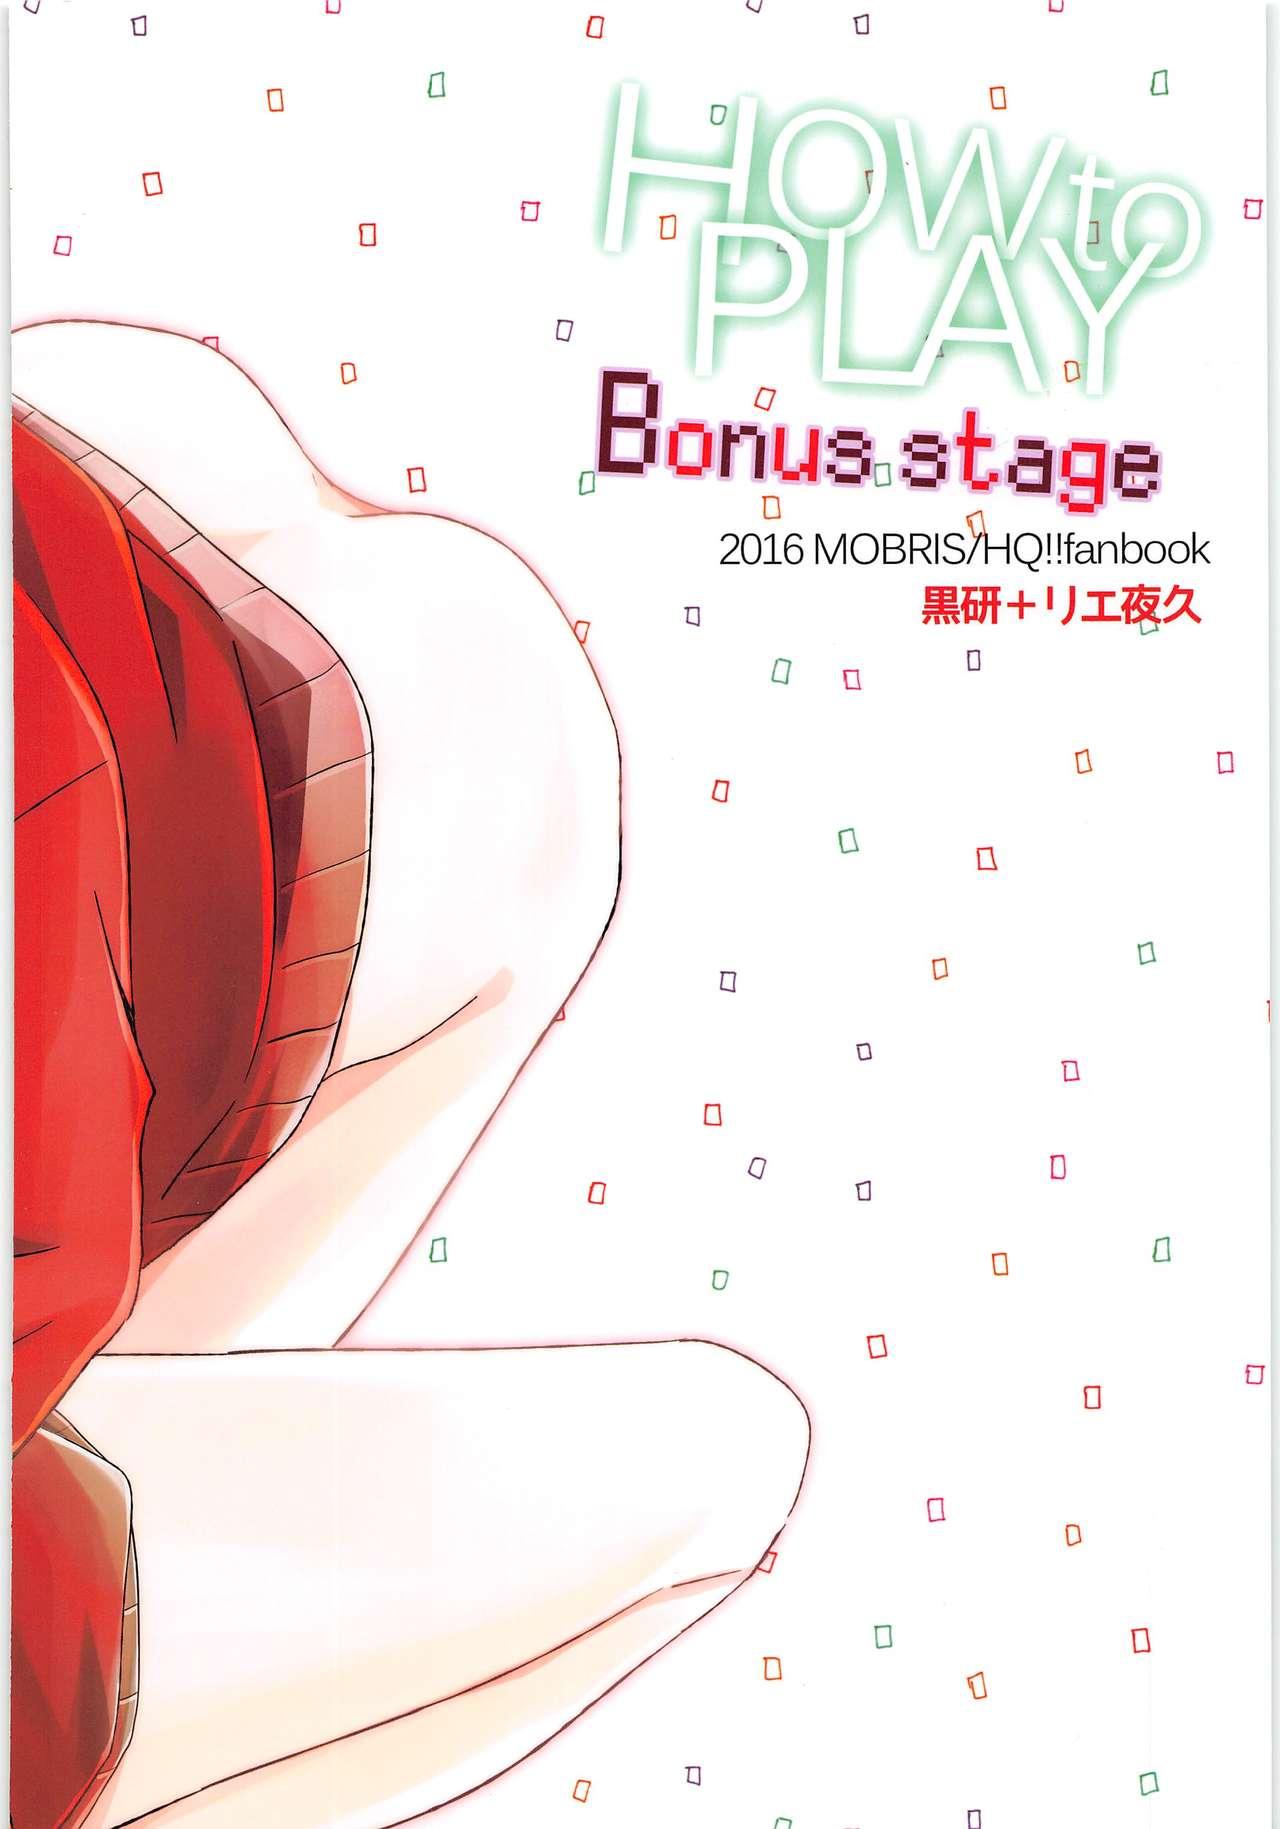 HOW to PLAY Bonus stage 33